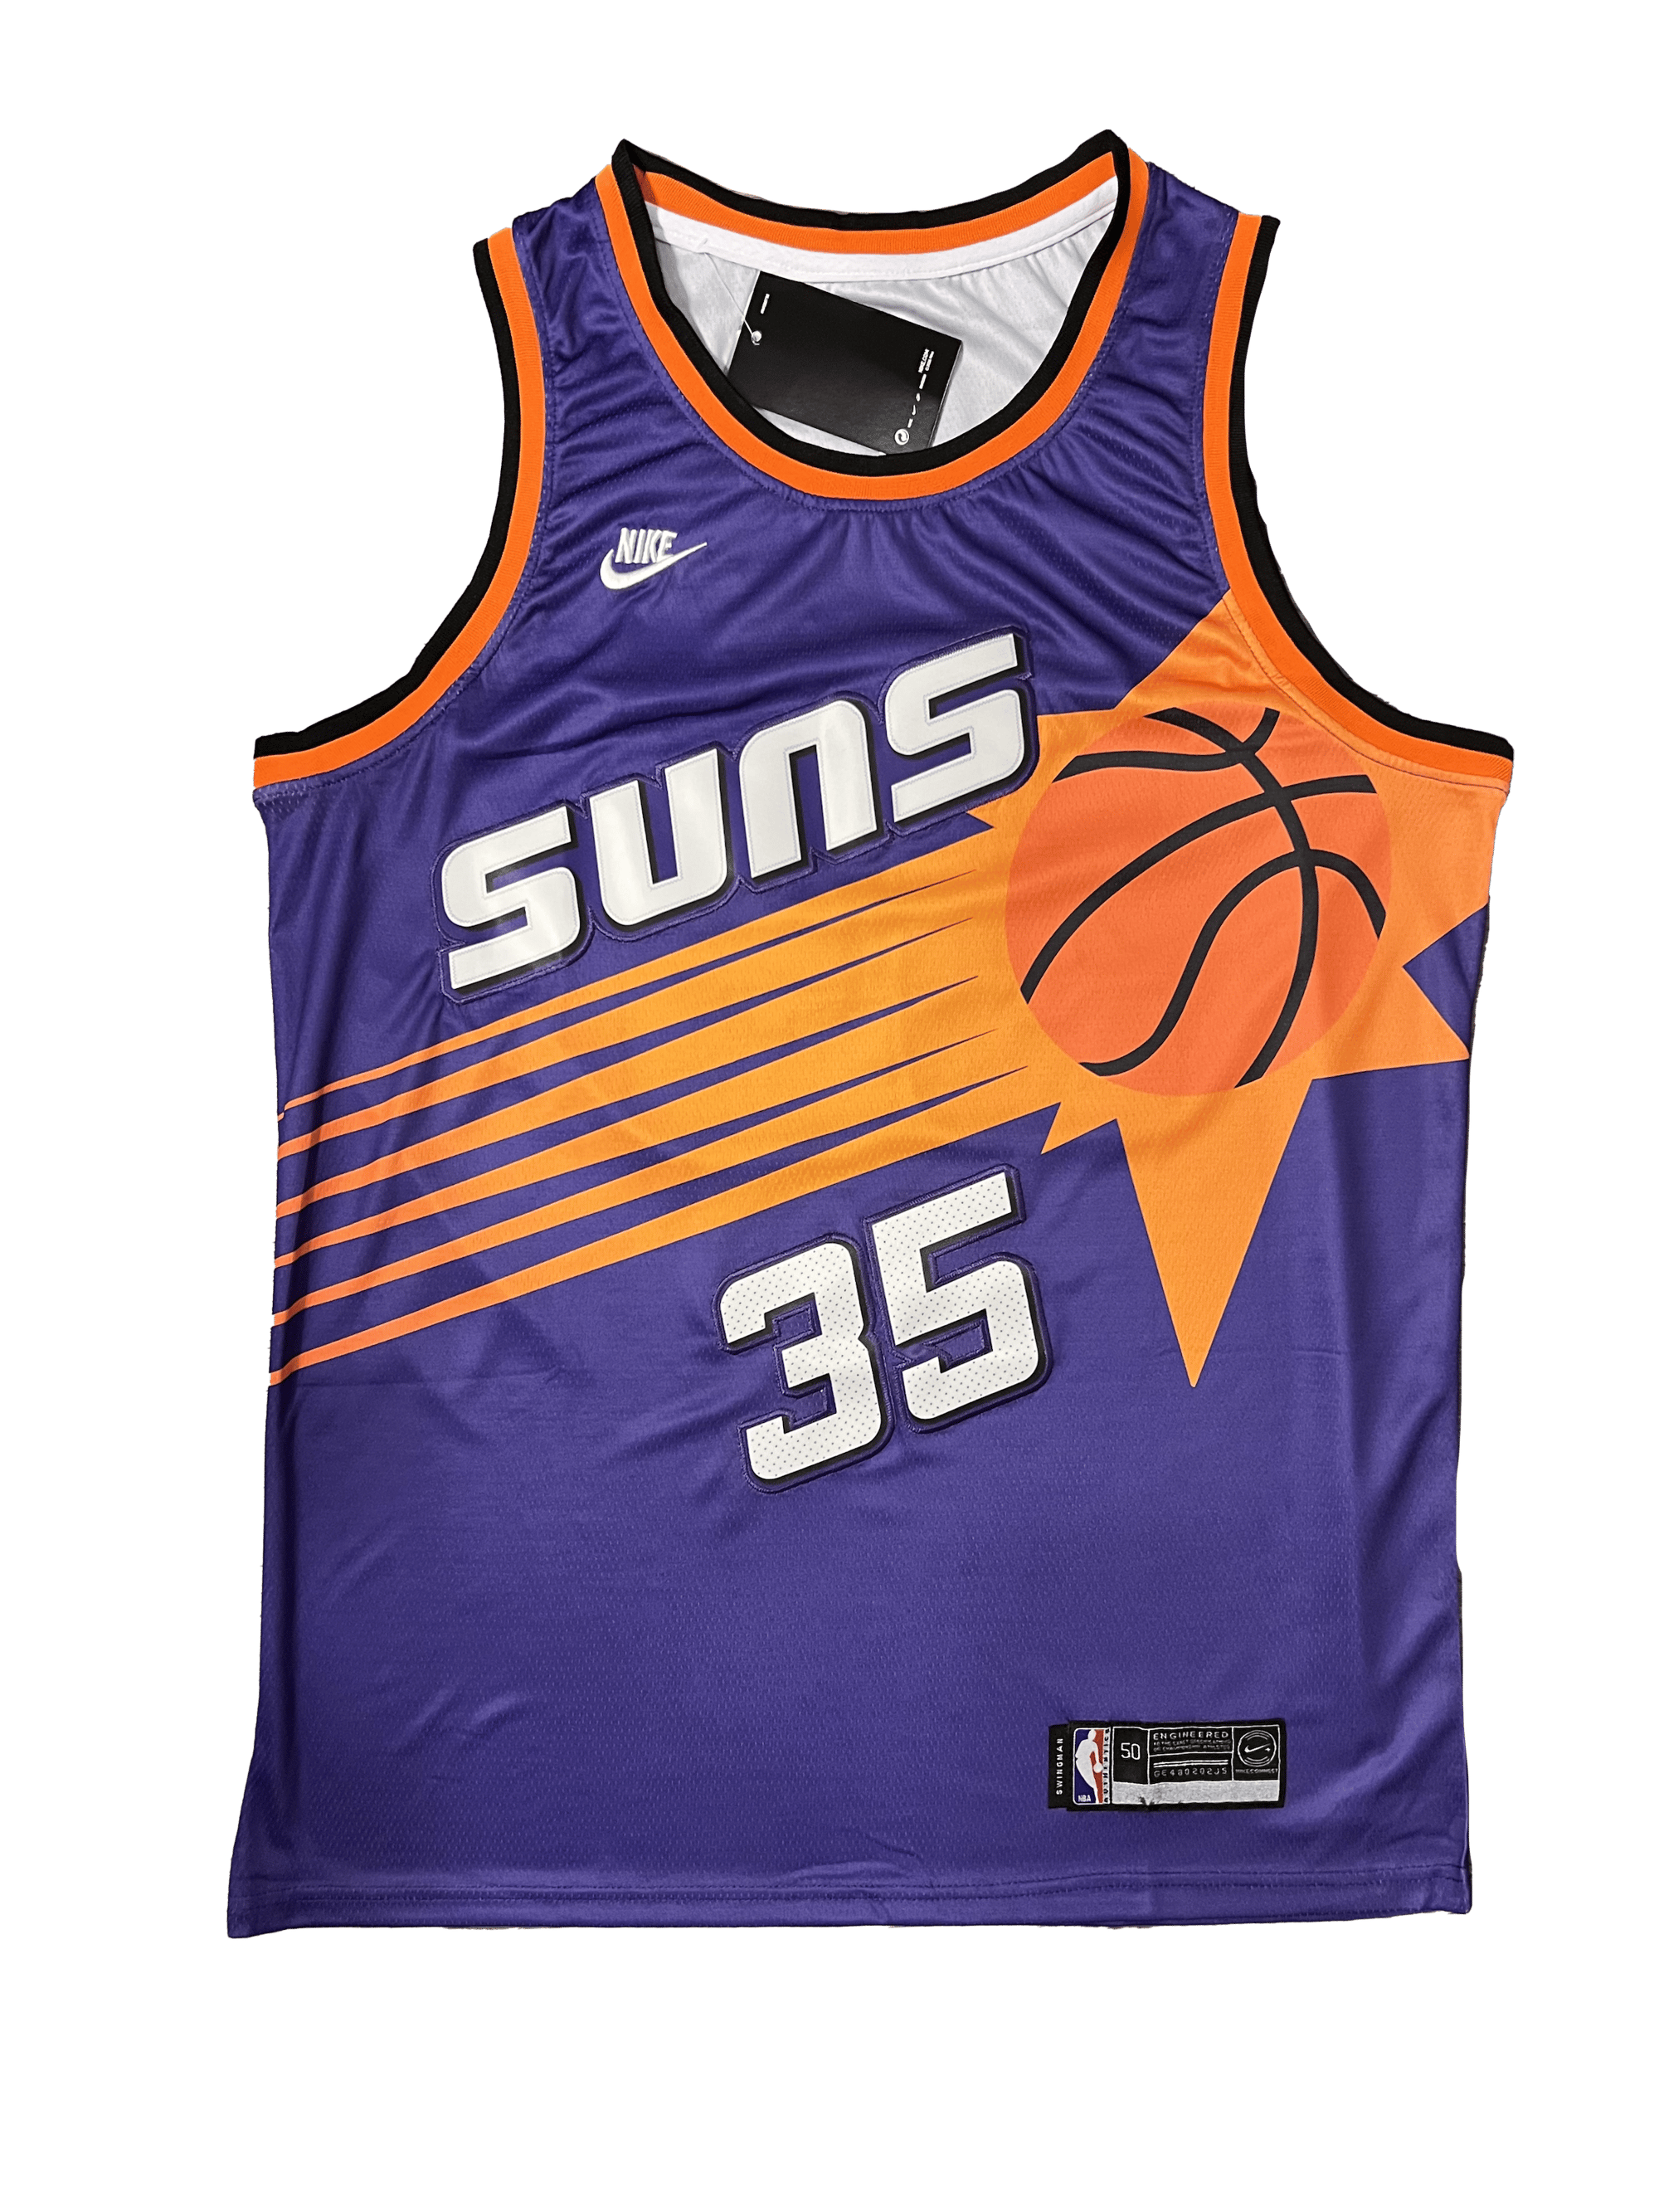 cheap phoenix suns jerseys